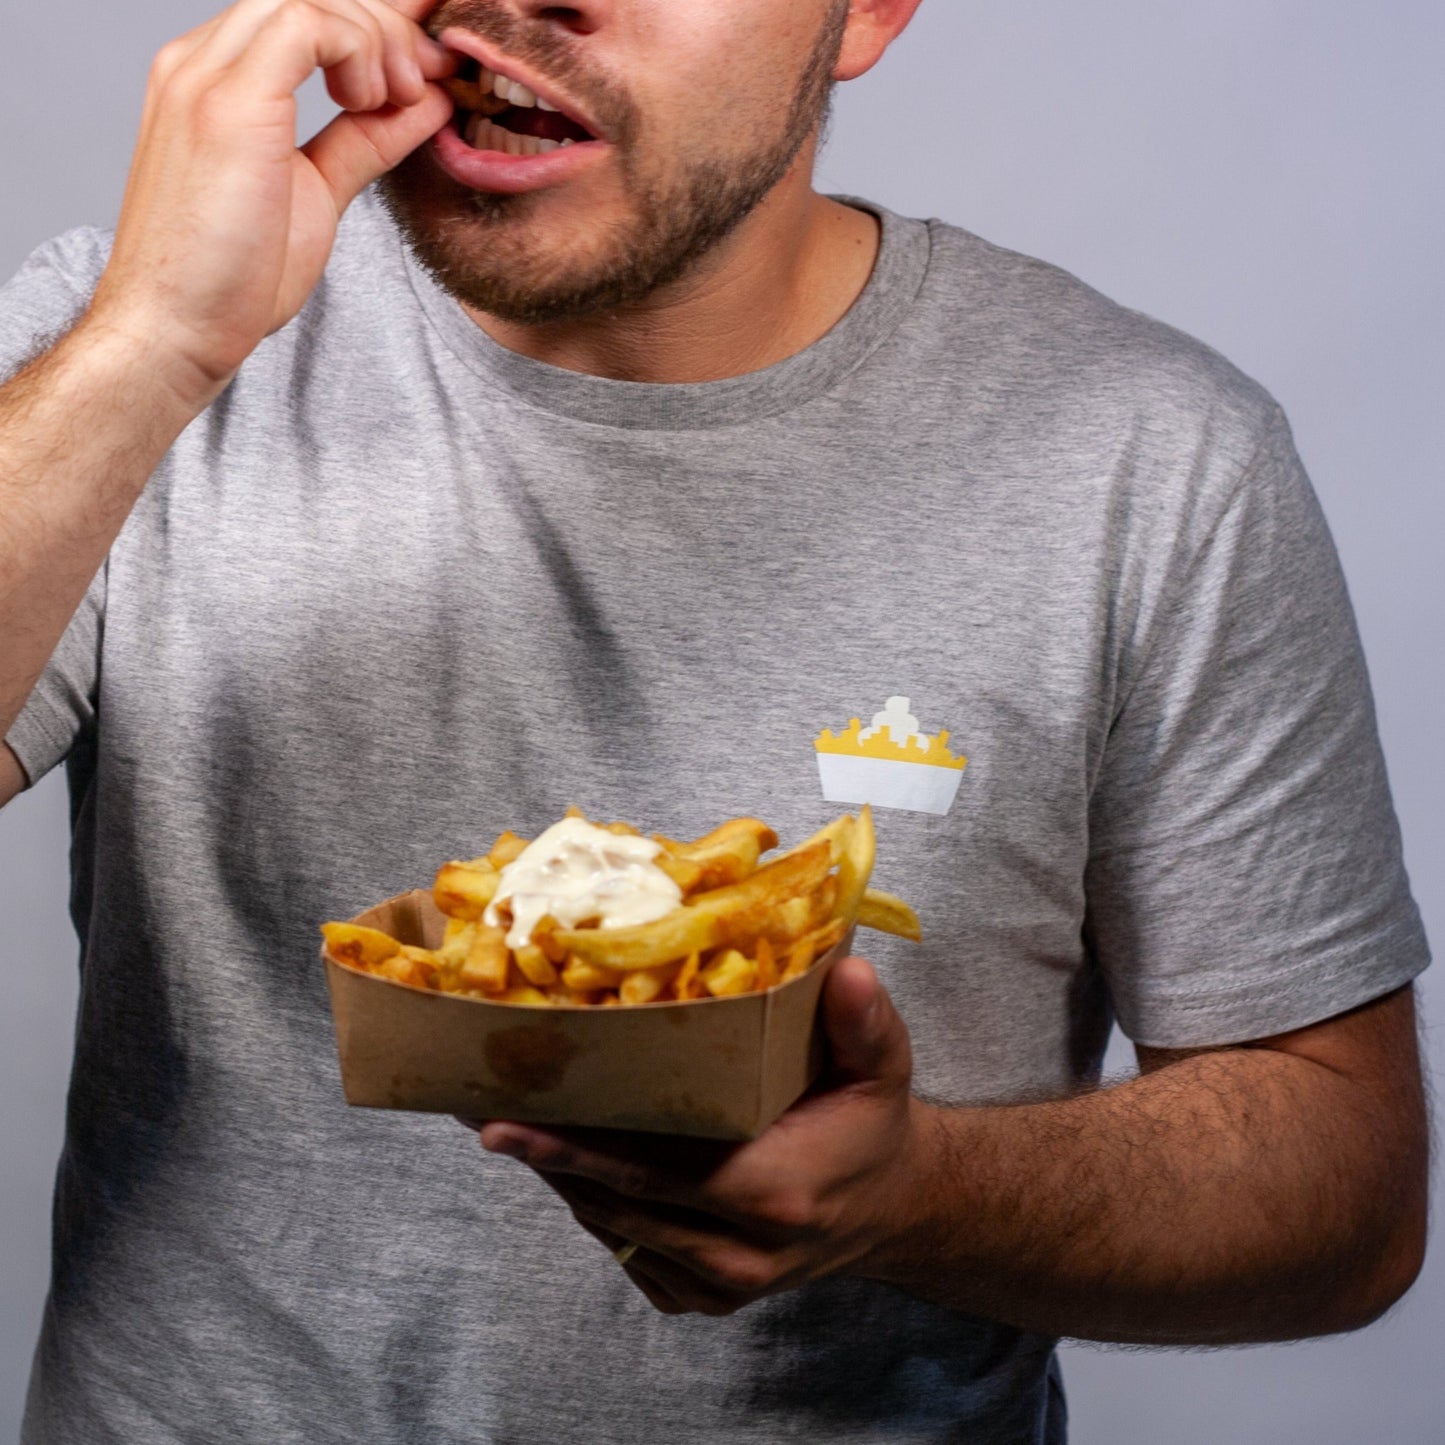 T-shirt frietjes met mayonaise FRIT